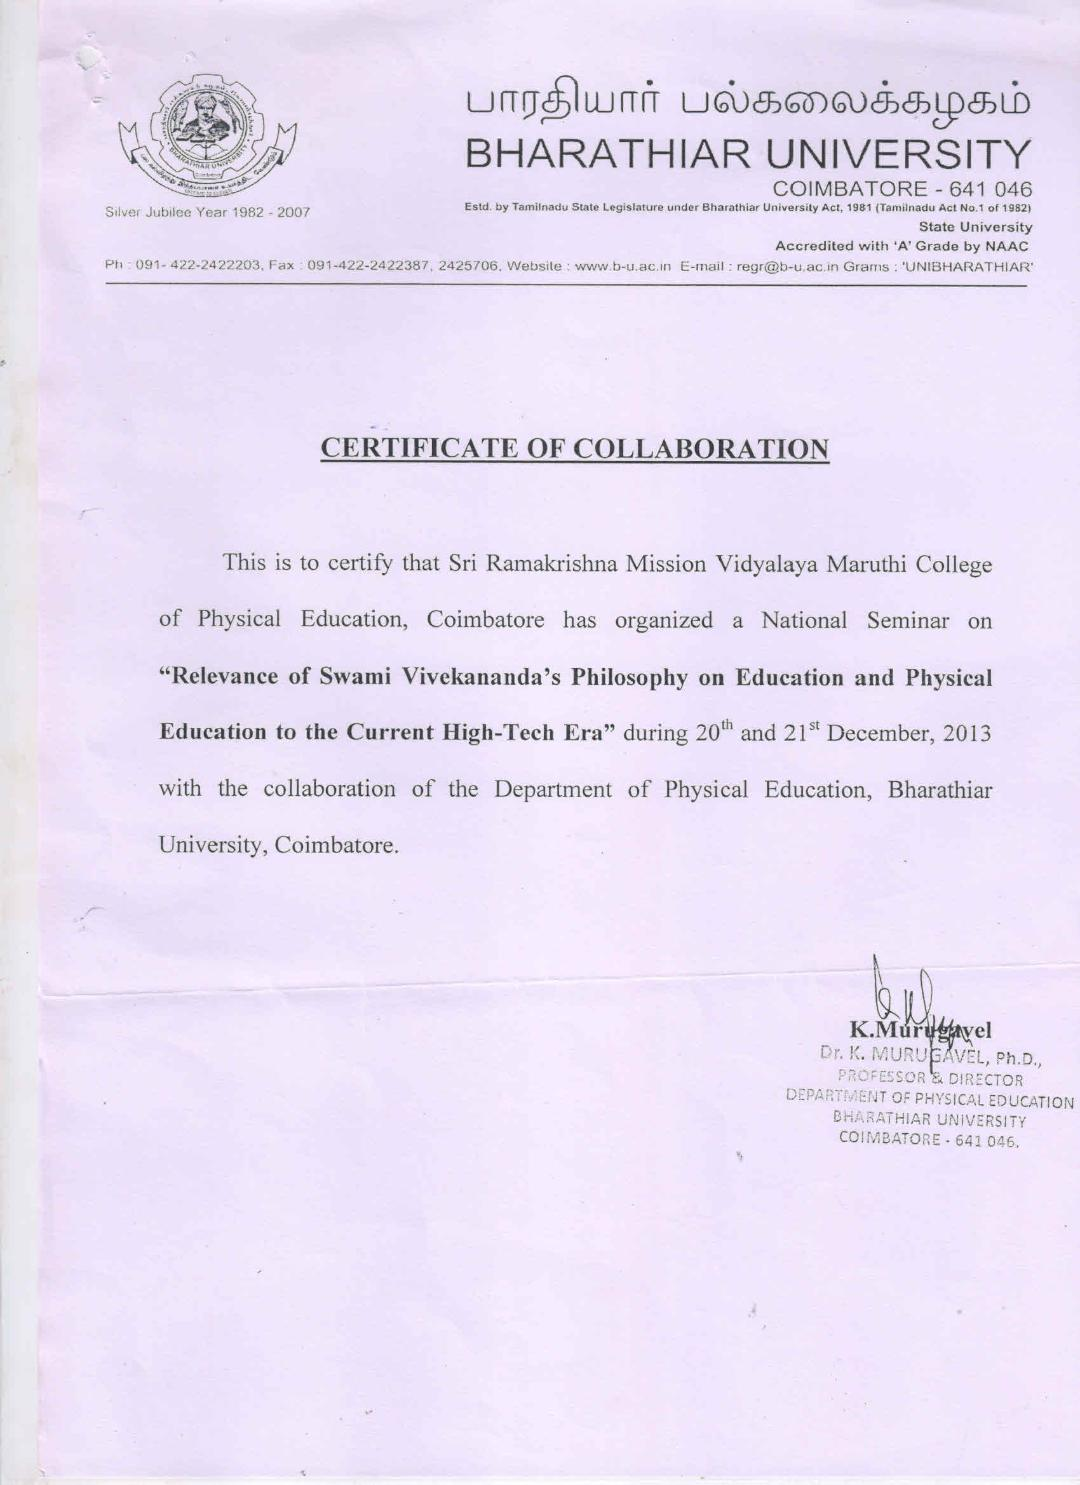 Collaboration certificate 1